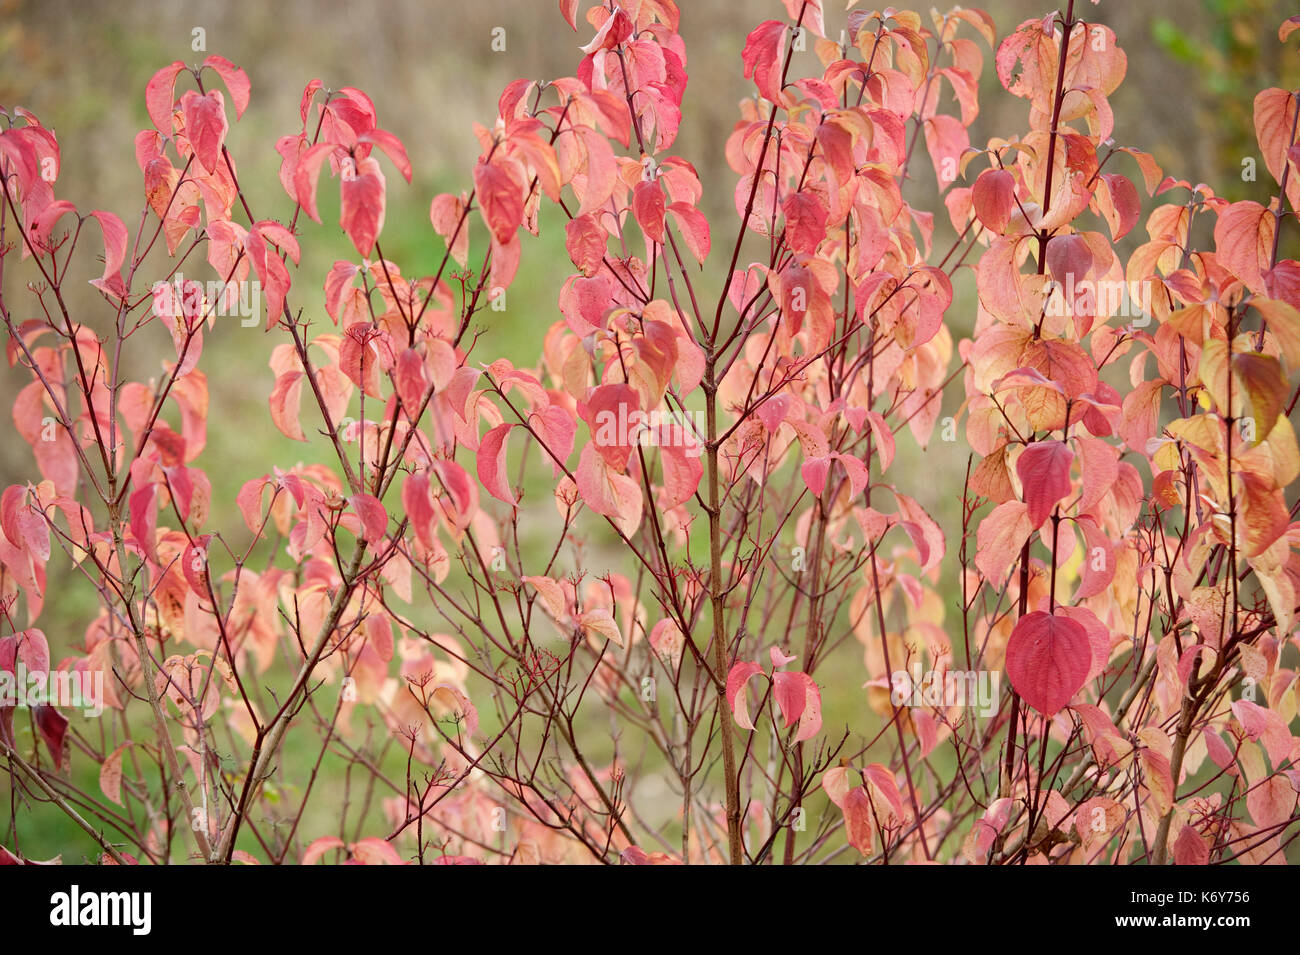 Hartriegel, Cornus sanguinea, ranscombe Farm Nature Reserve, Kent GROSSBRITANNIEN, rote Farben des Herbstes, Blätter Stockfoto